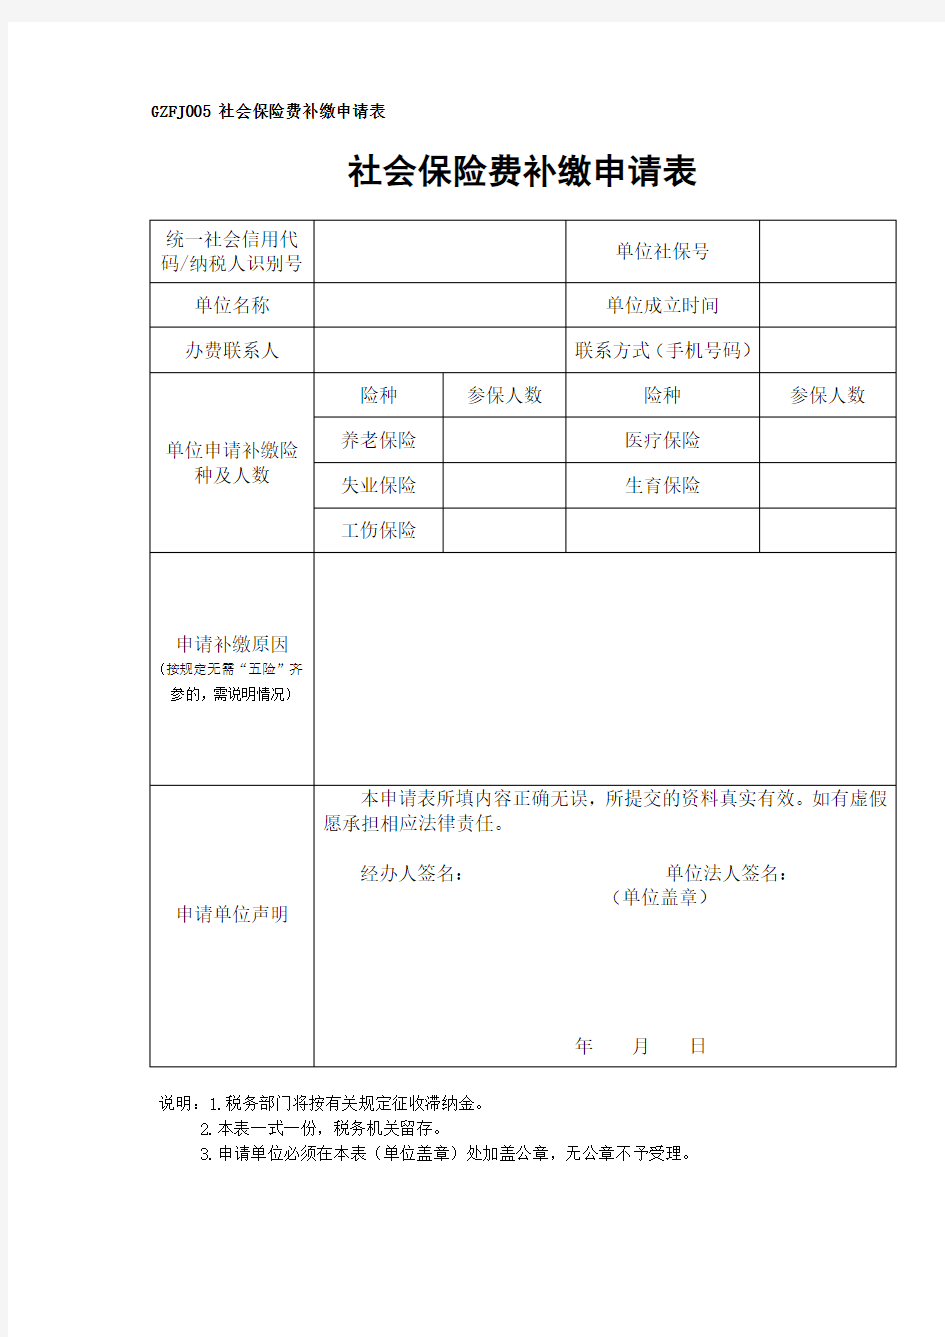 GZFJ005广州市社会保险费补缴申请表